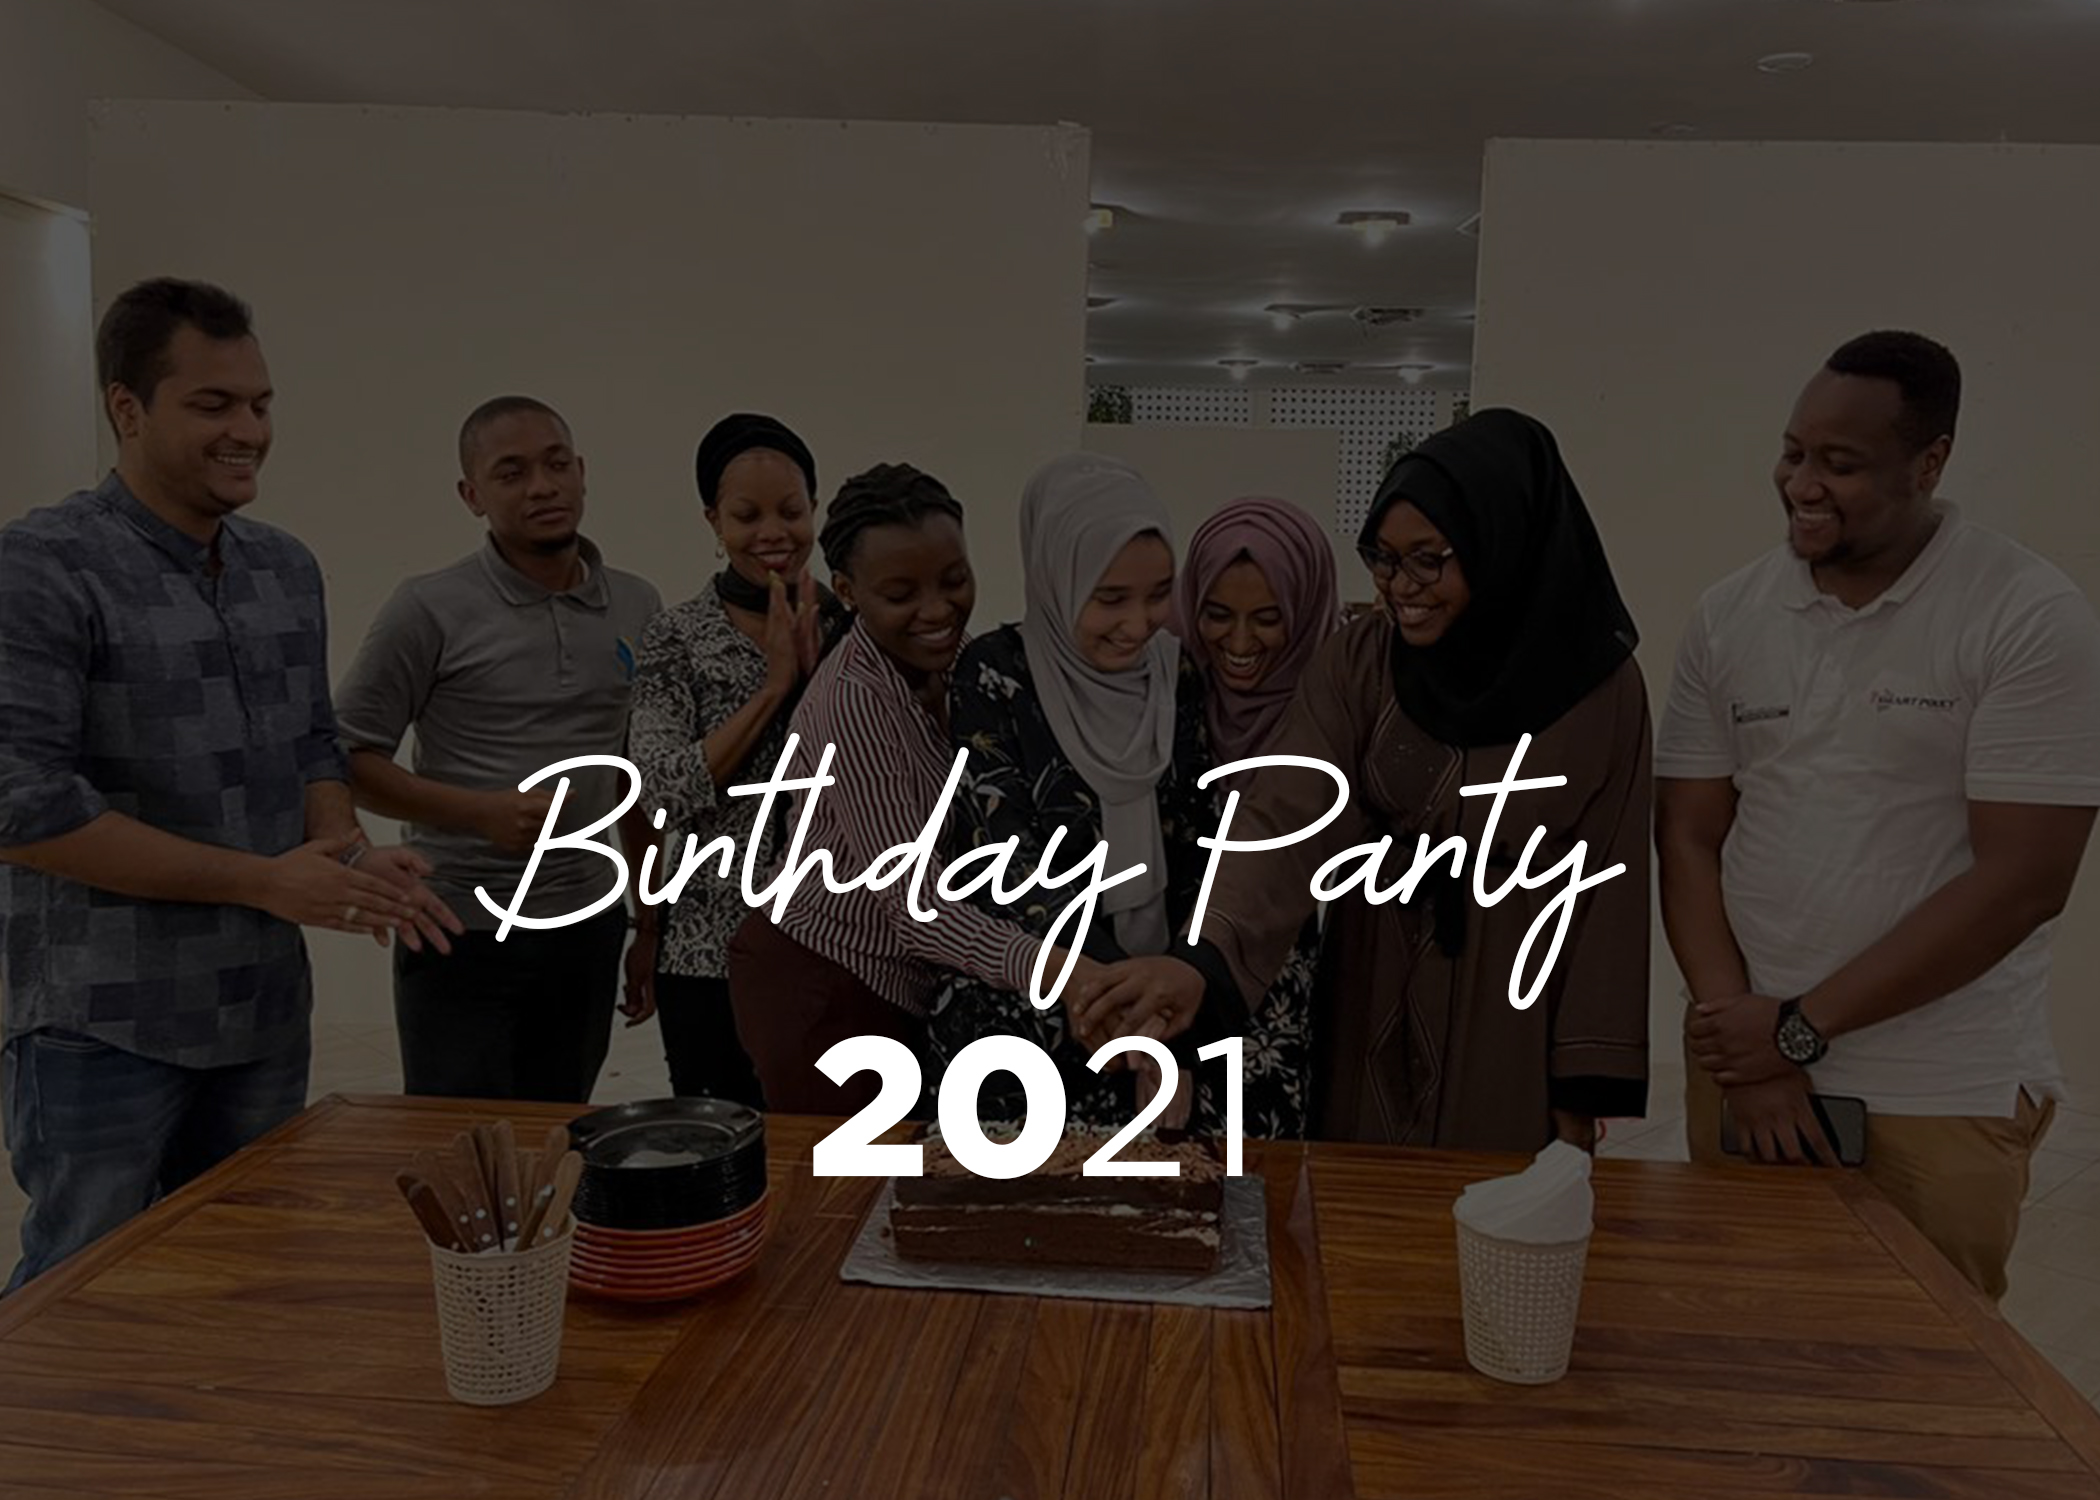 CultureBirthday Party 2021